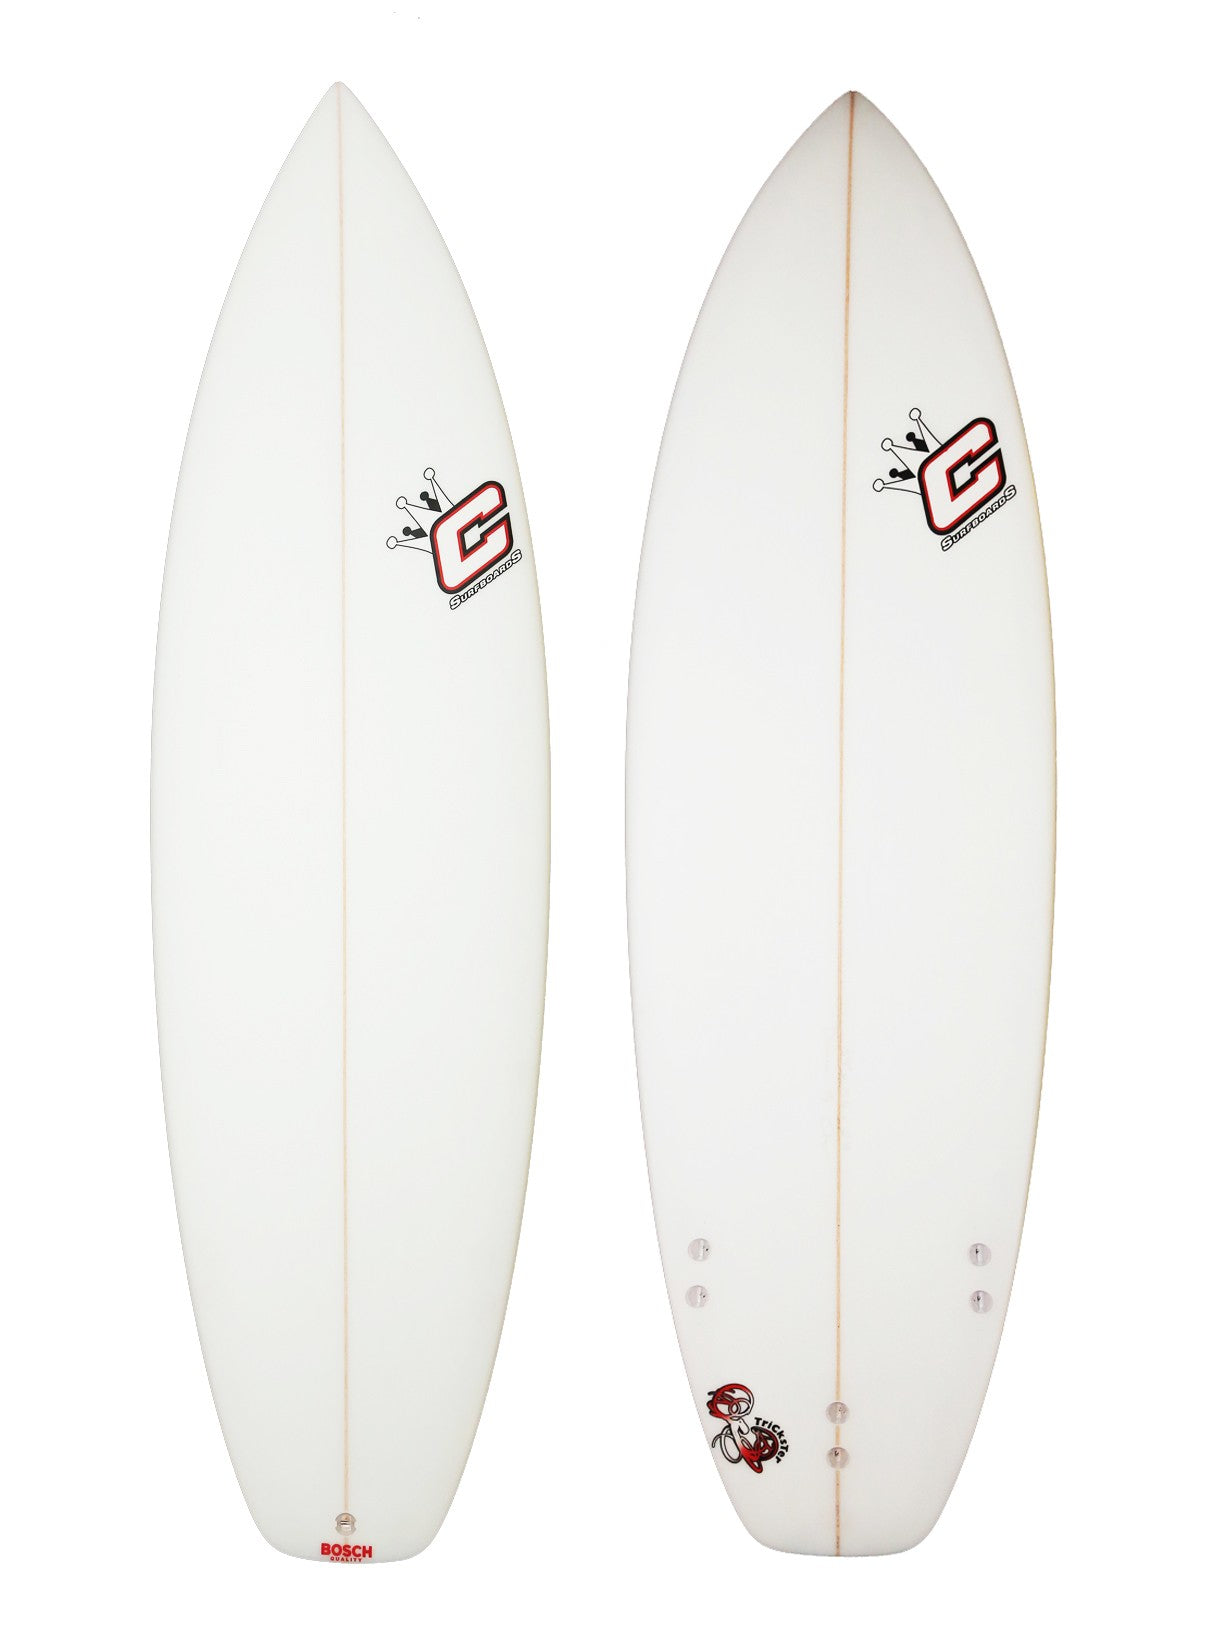 CLAYTON Surfboards - Trickster (PU) FCS - 5'5